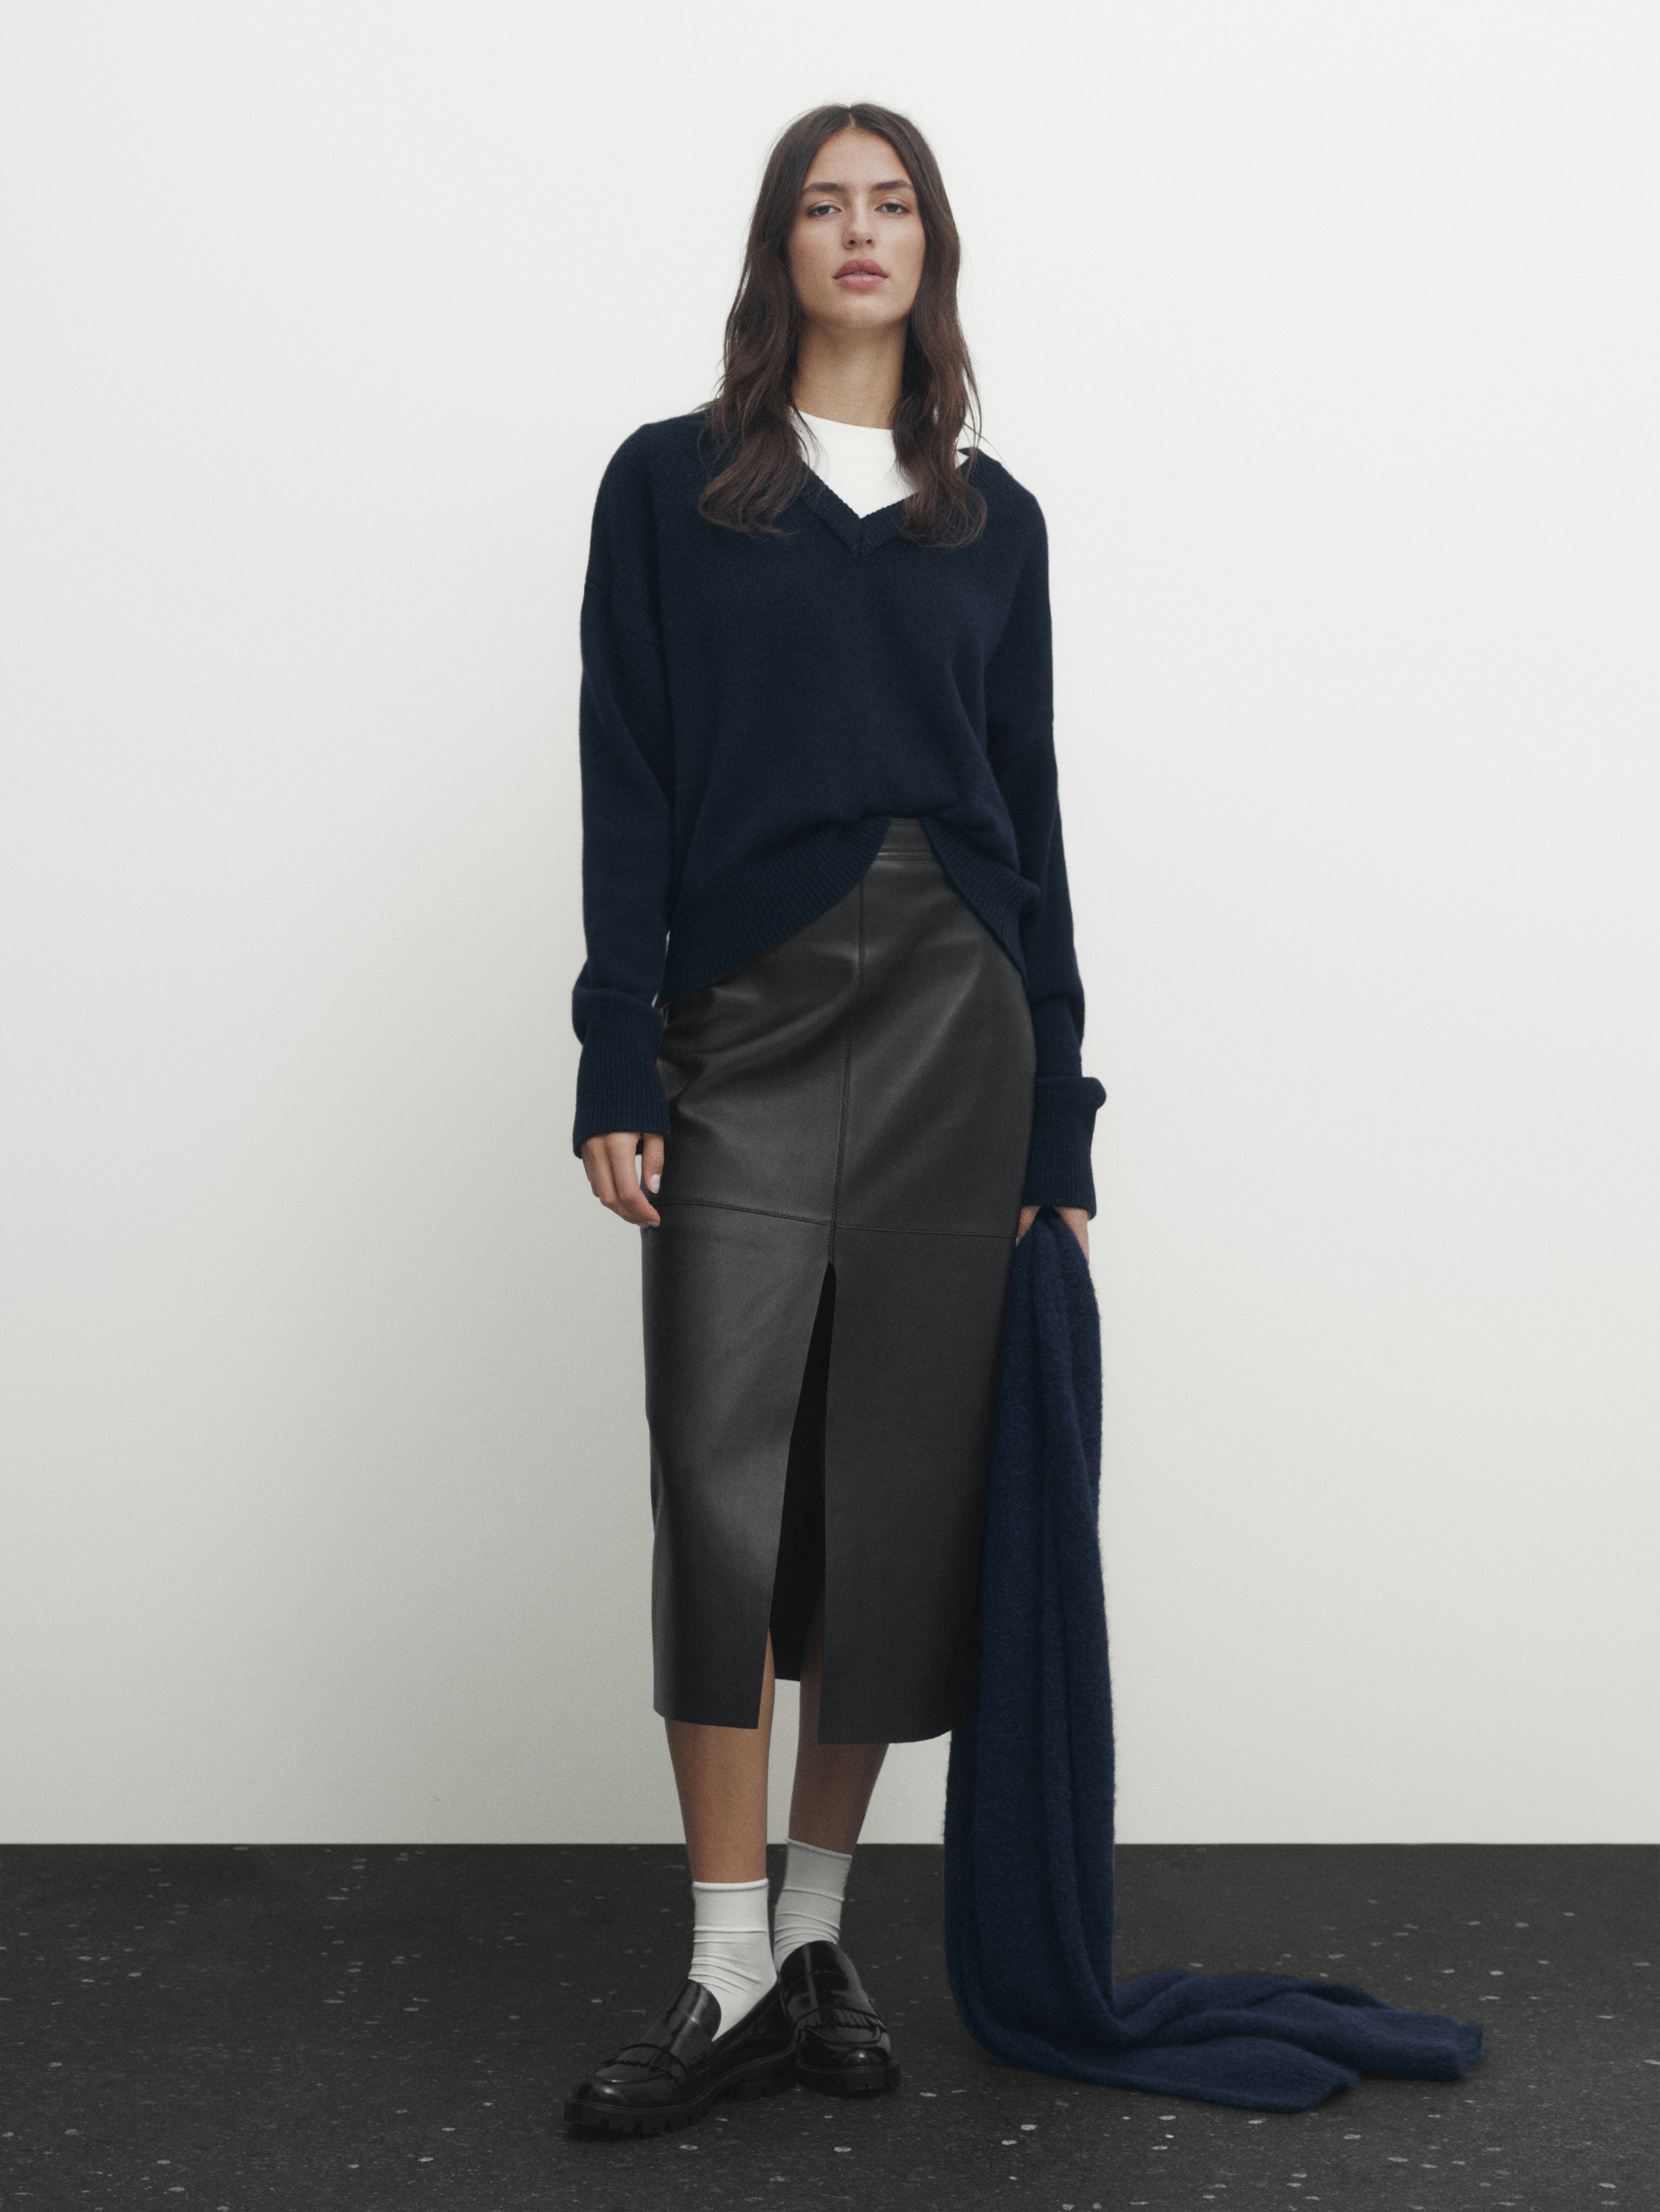 Black nappa leather midi skirt with slit